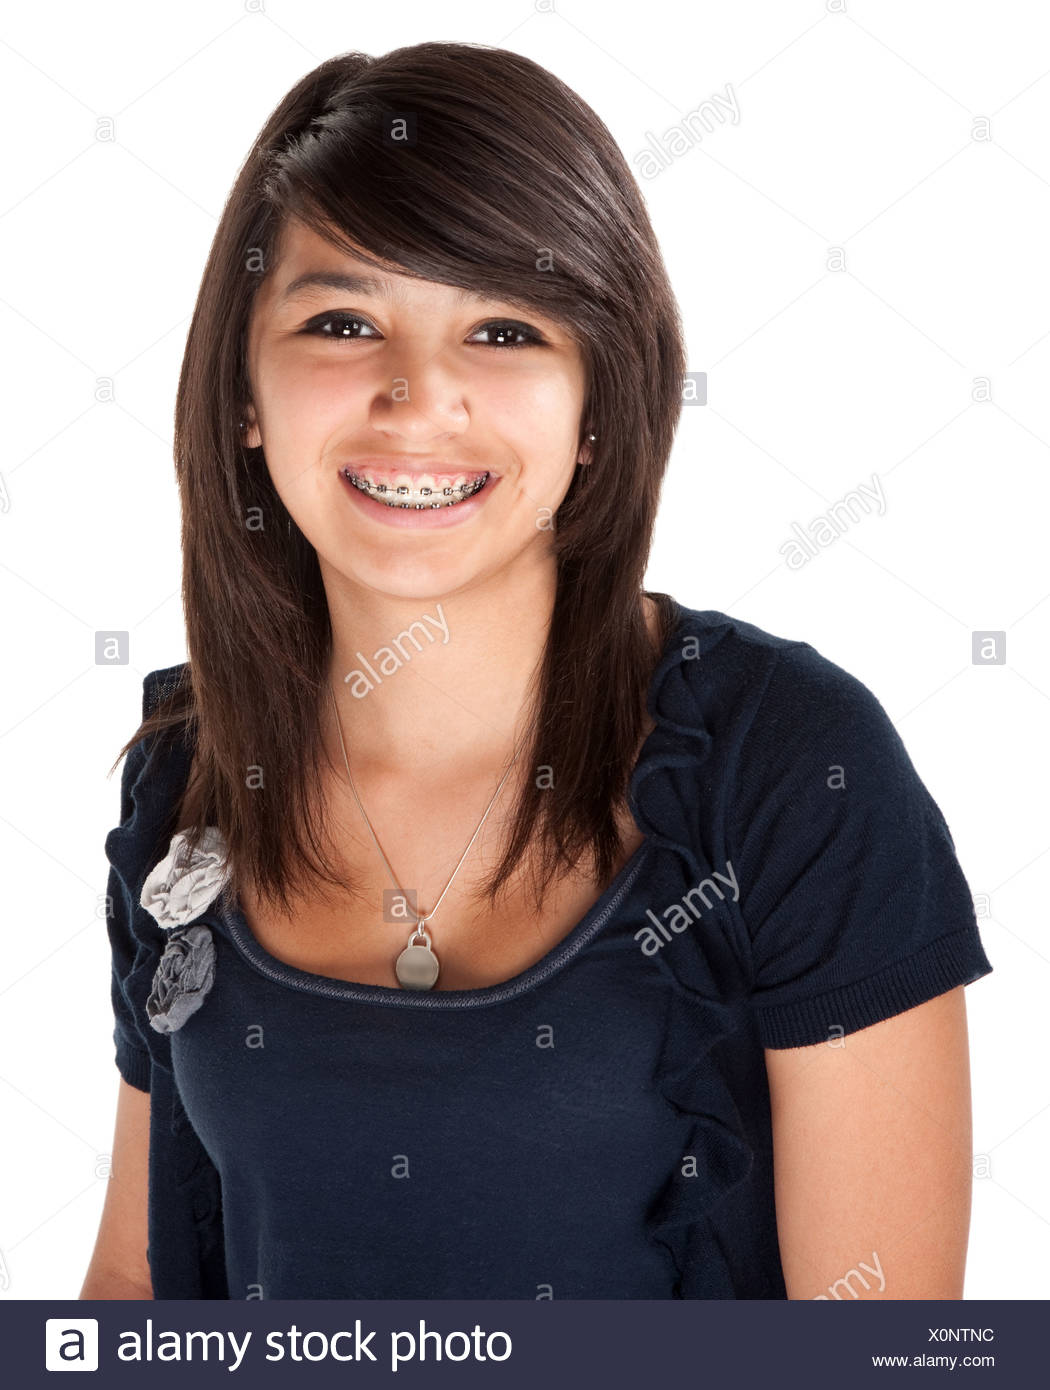 Cute Hispanic Teenage Girl With Braces And A Big Smile